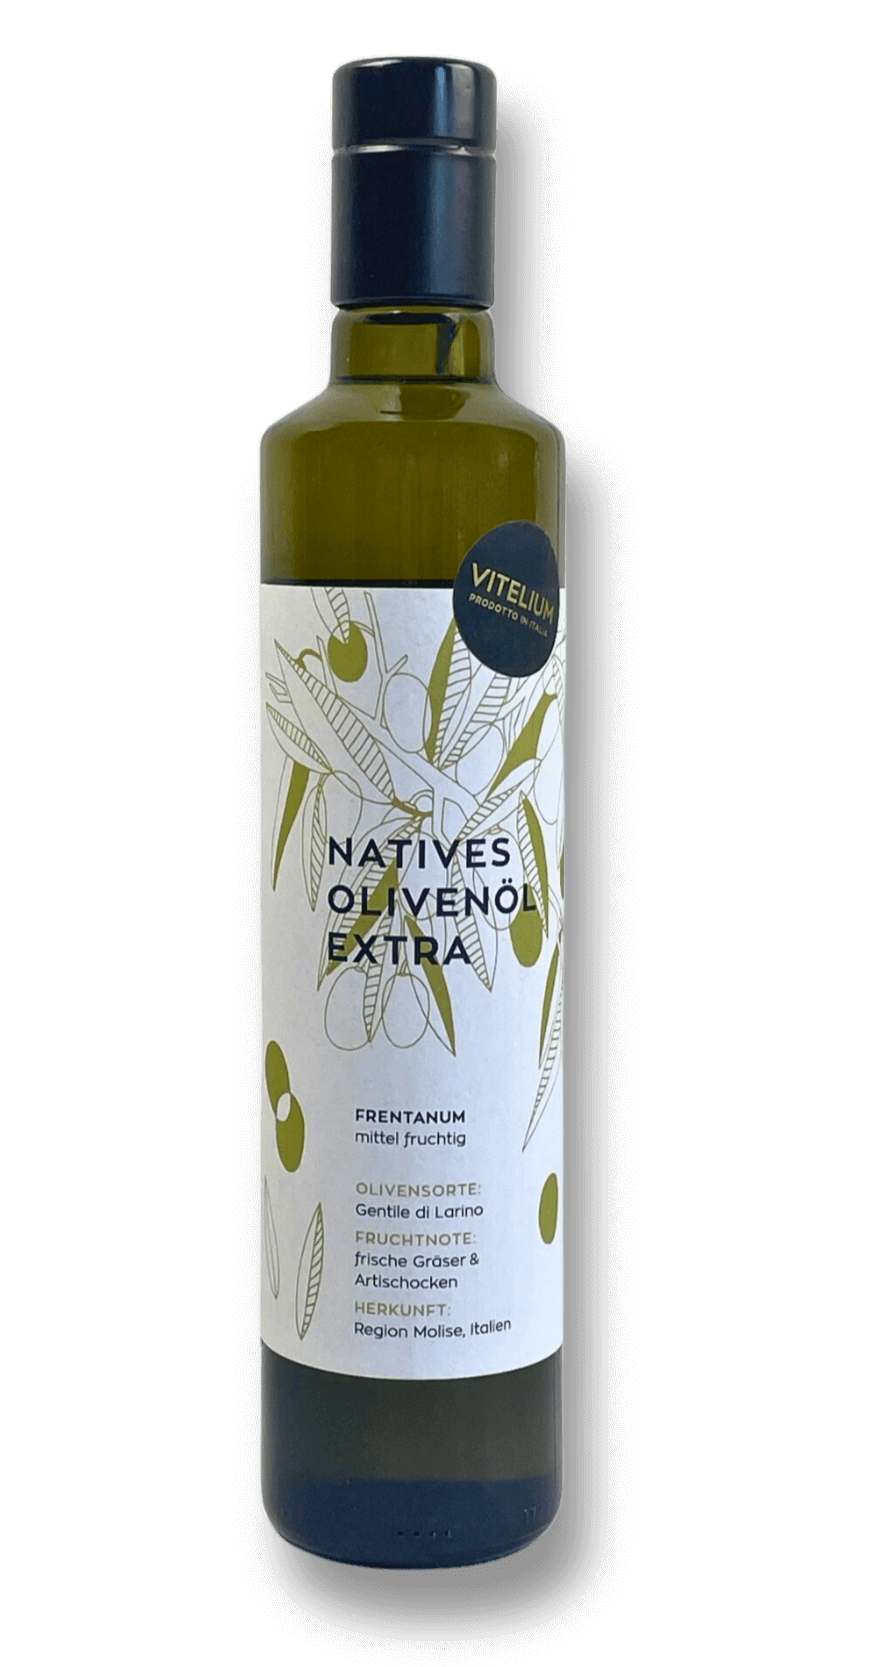 Natives Olivenöl Extra - FRETANUM - mittelfruchtig